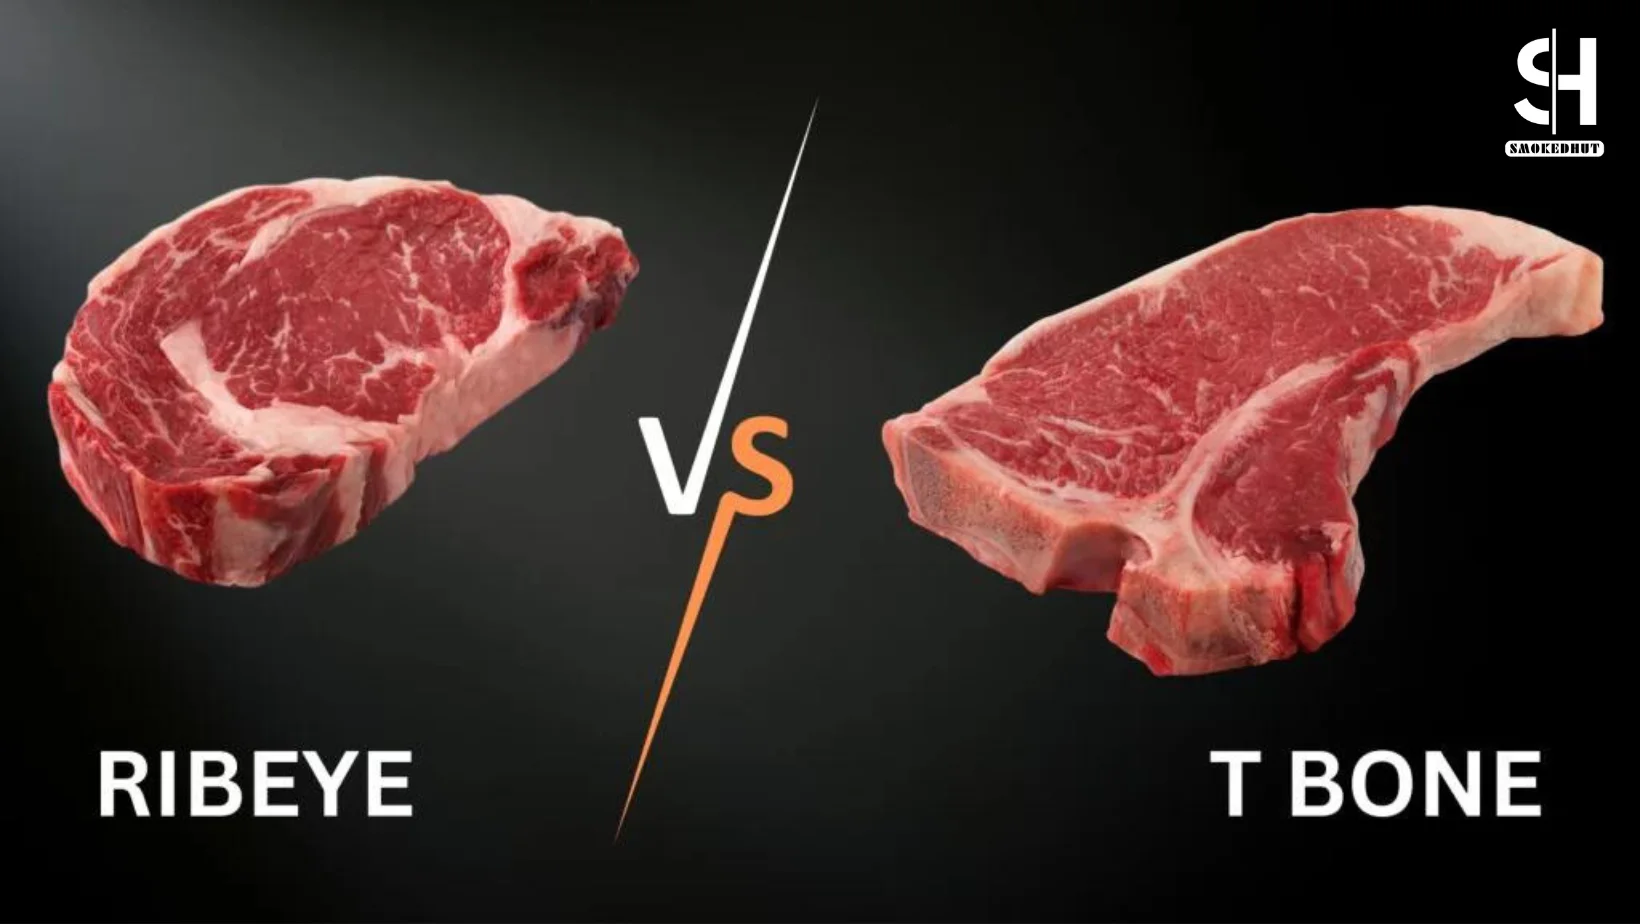 Ribeye vs T-bone The Ultimate Steak Debate